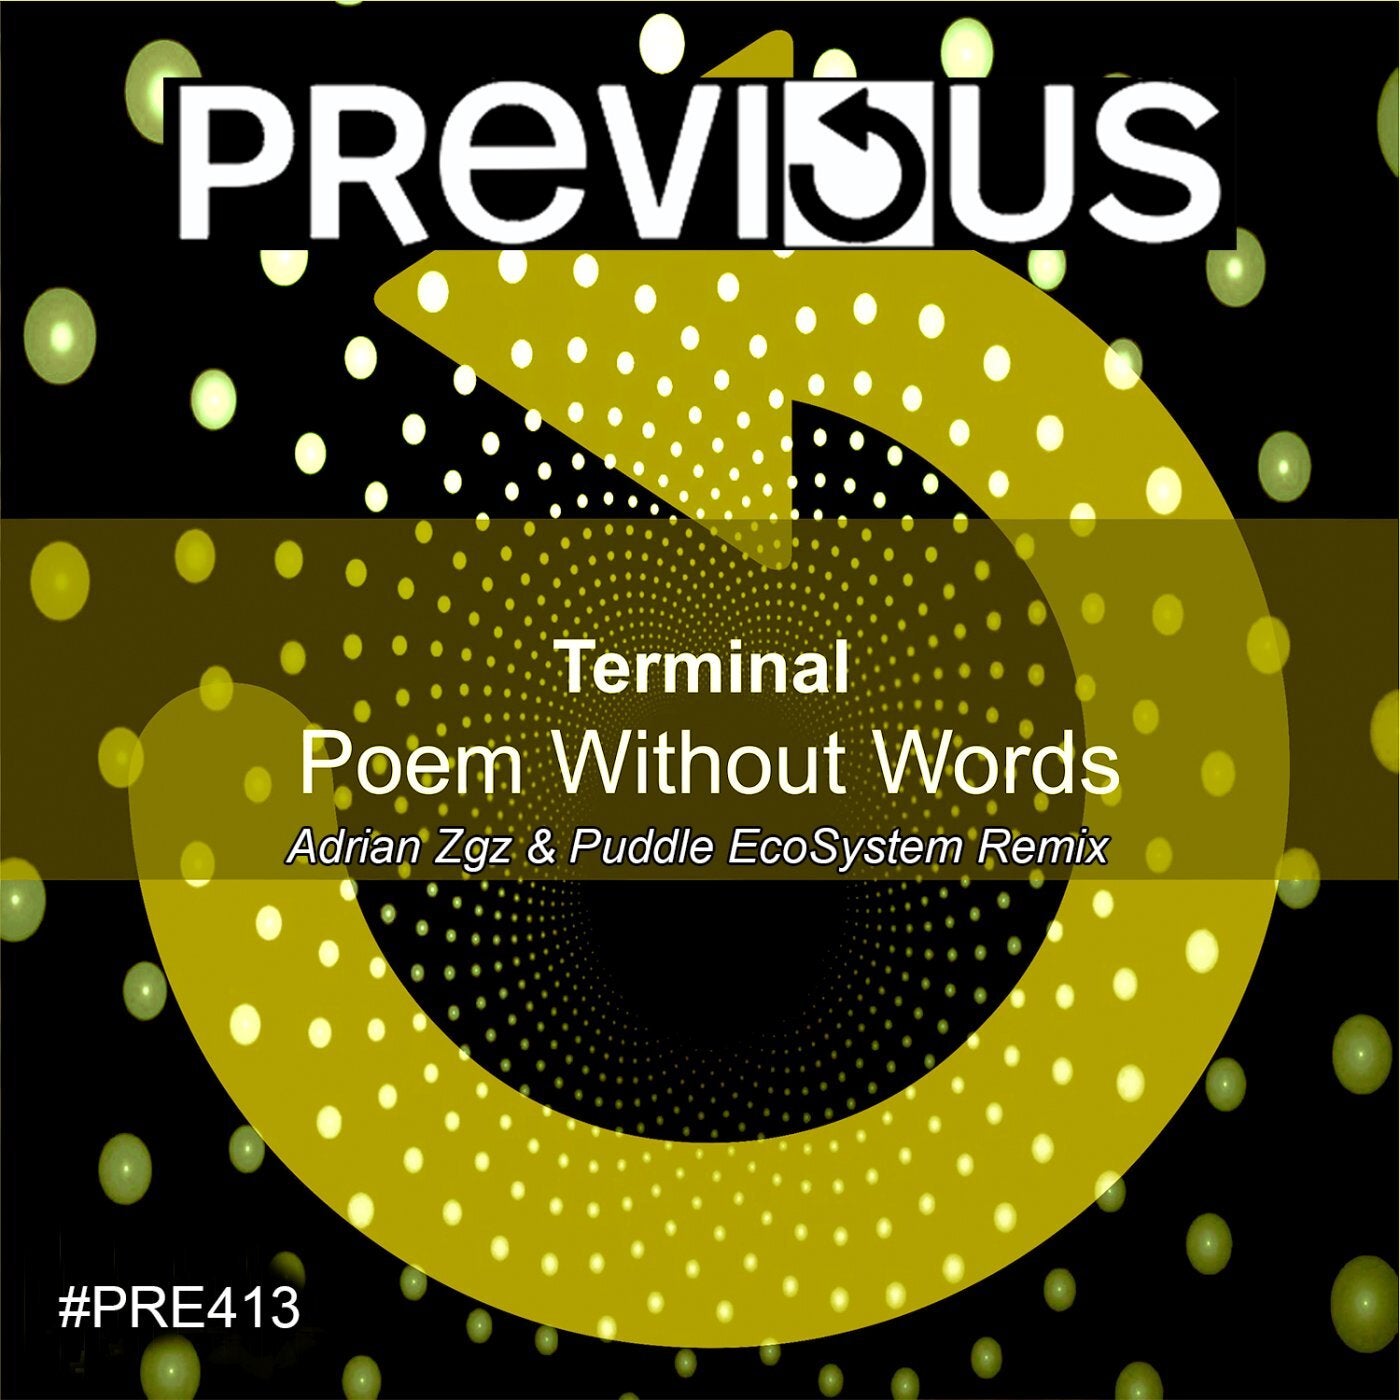 Poem Without Words (Adrian Zgz & Puddle EcoSystem Remix)